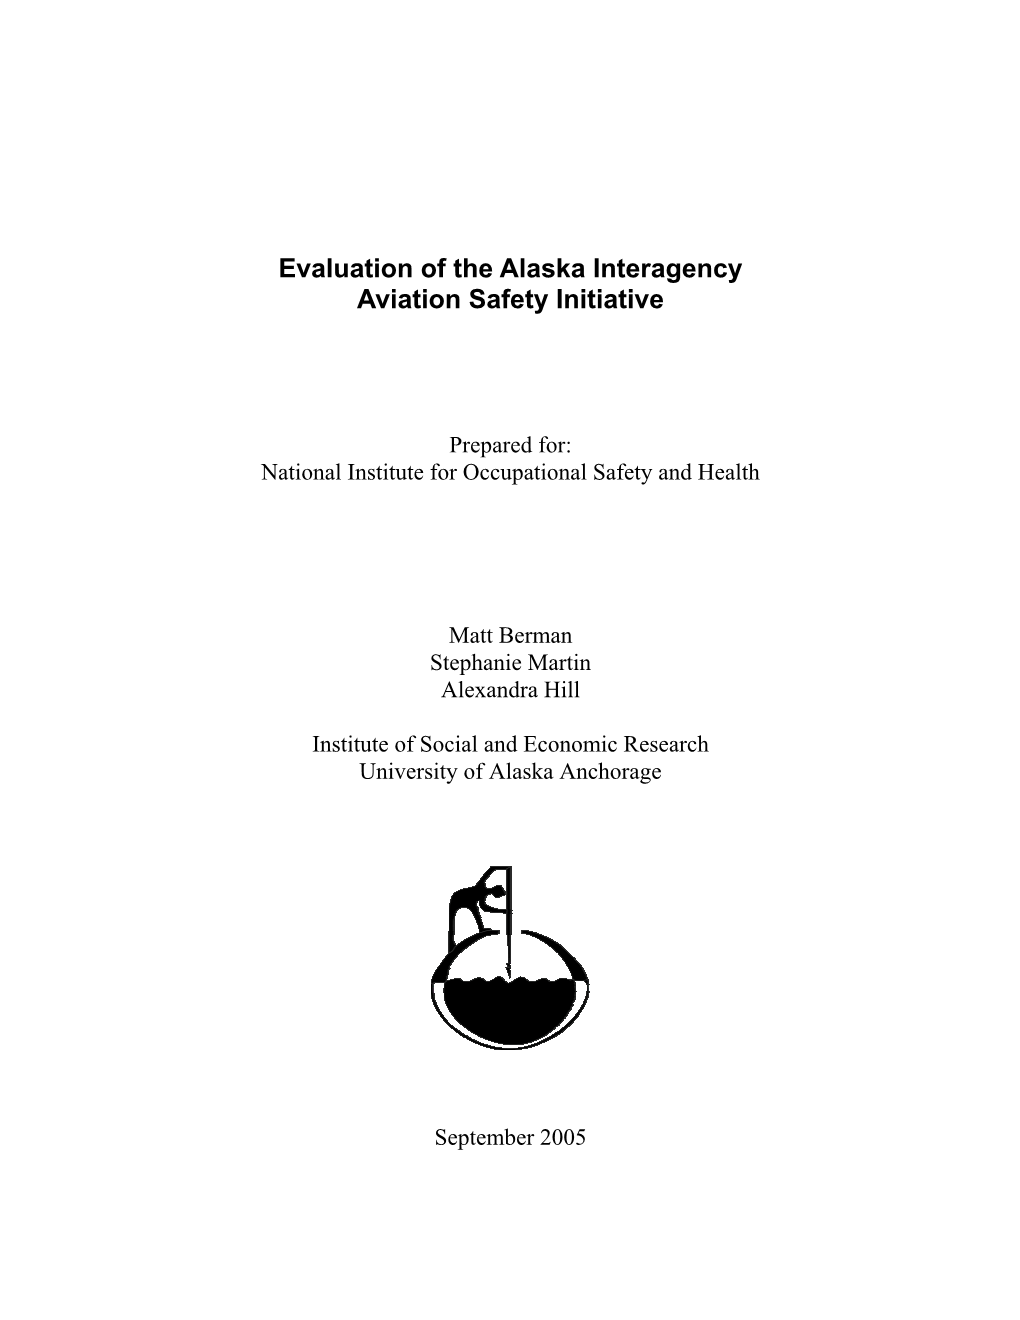 Evaluation of the Alaska Interagency Aviation Safety Initiative